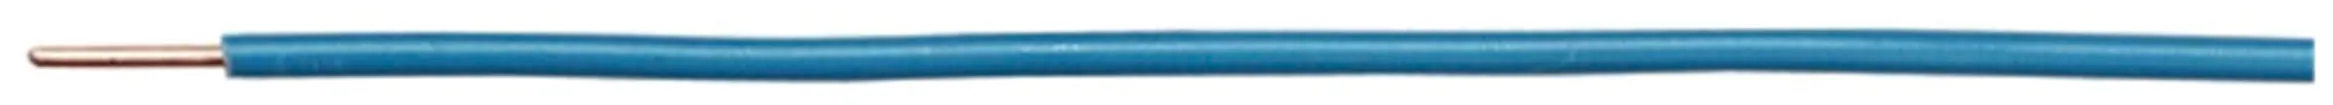 Fil N H07Z1-U sans halogène 1.5mm² 450/750V bleu clair Cca 